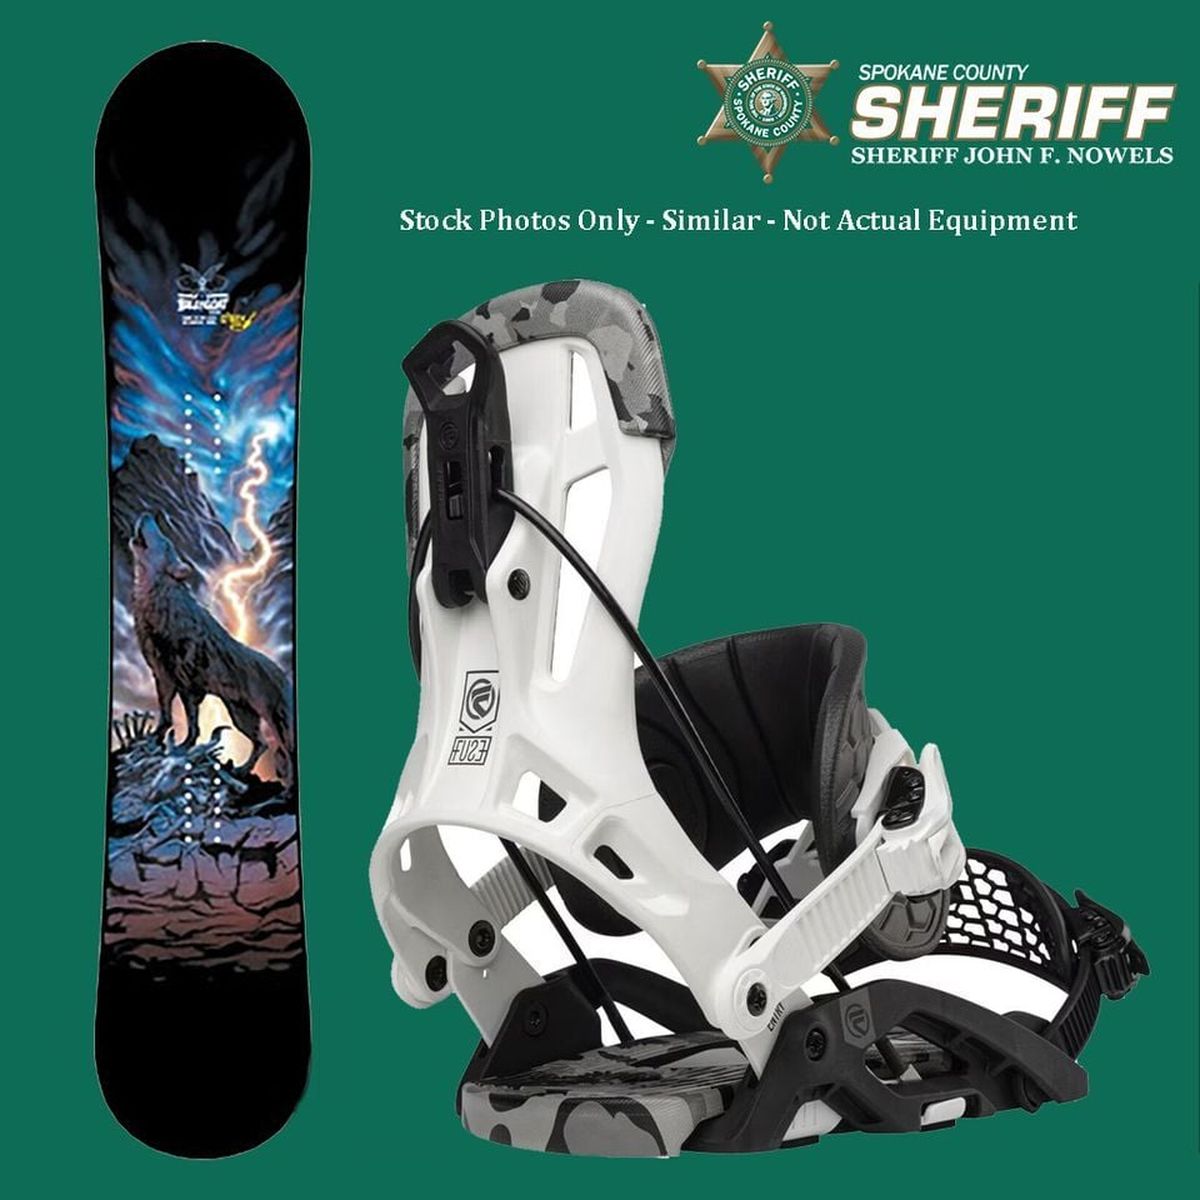 Stock photo of snowboard and binding  (Courtesy of Spokane County Sheriff